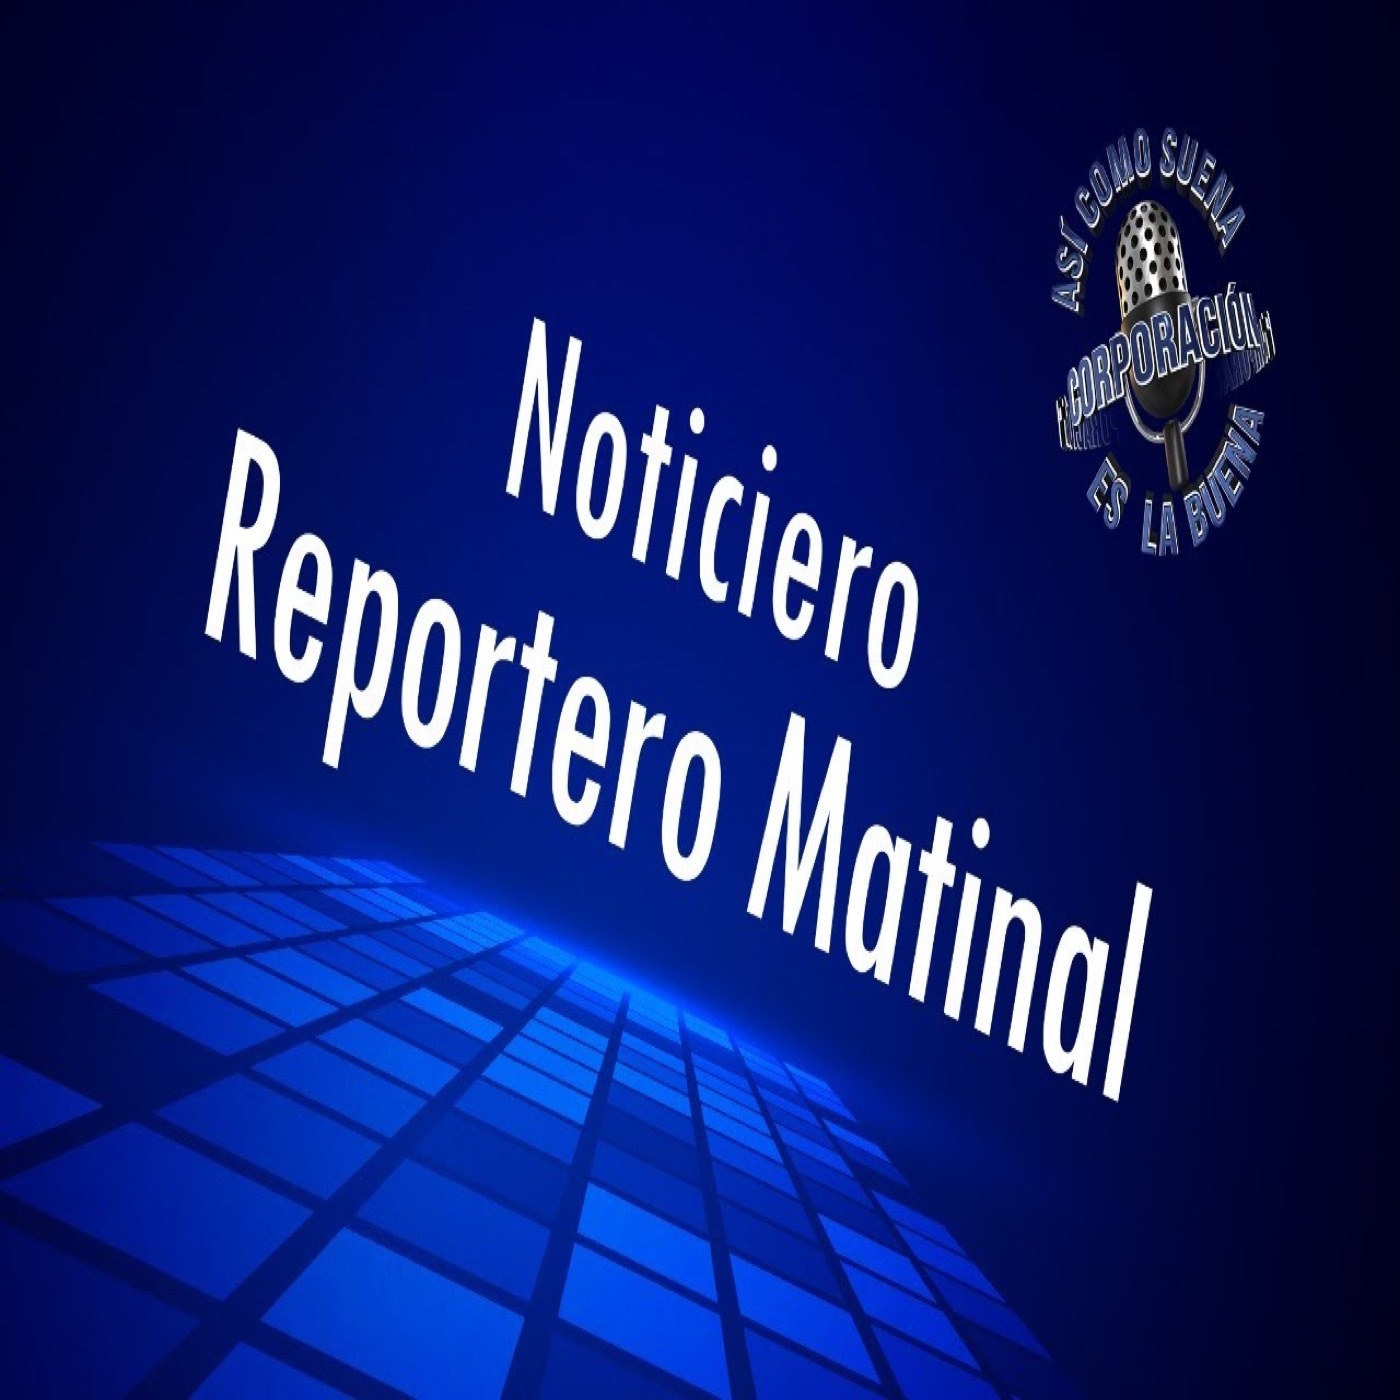 Noticiero Reportero Matinal - Monday, November 21, 2022